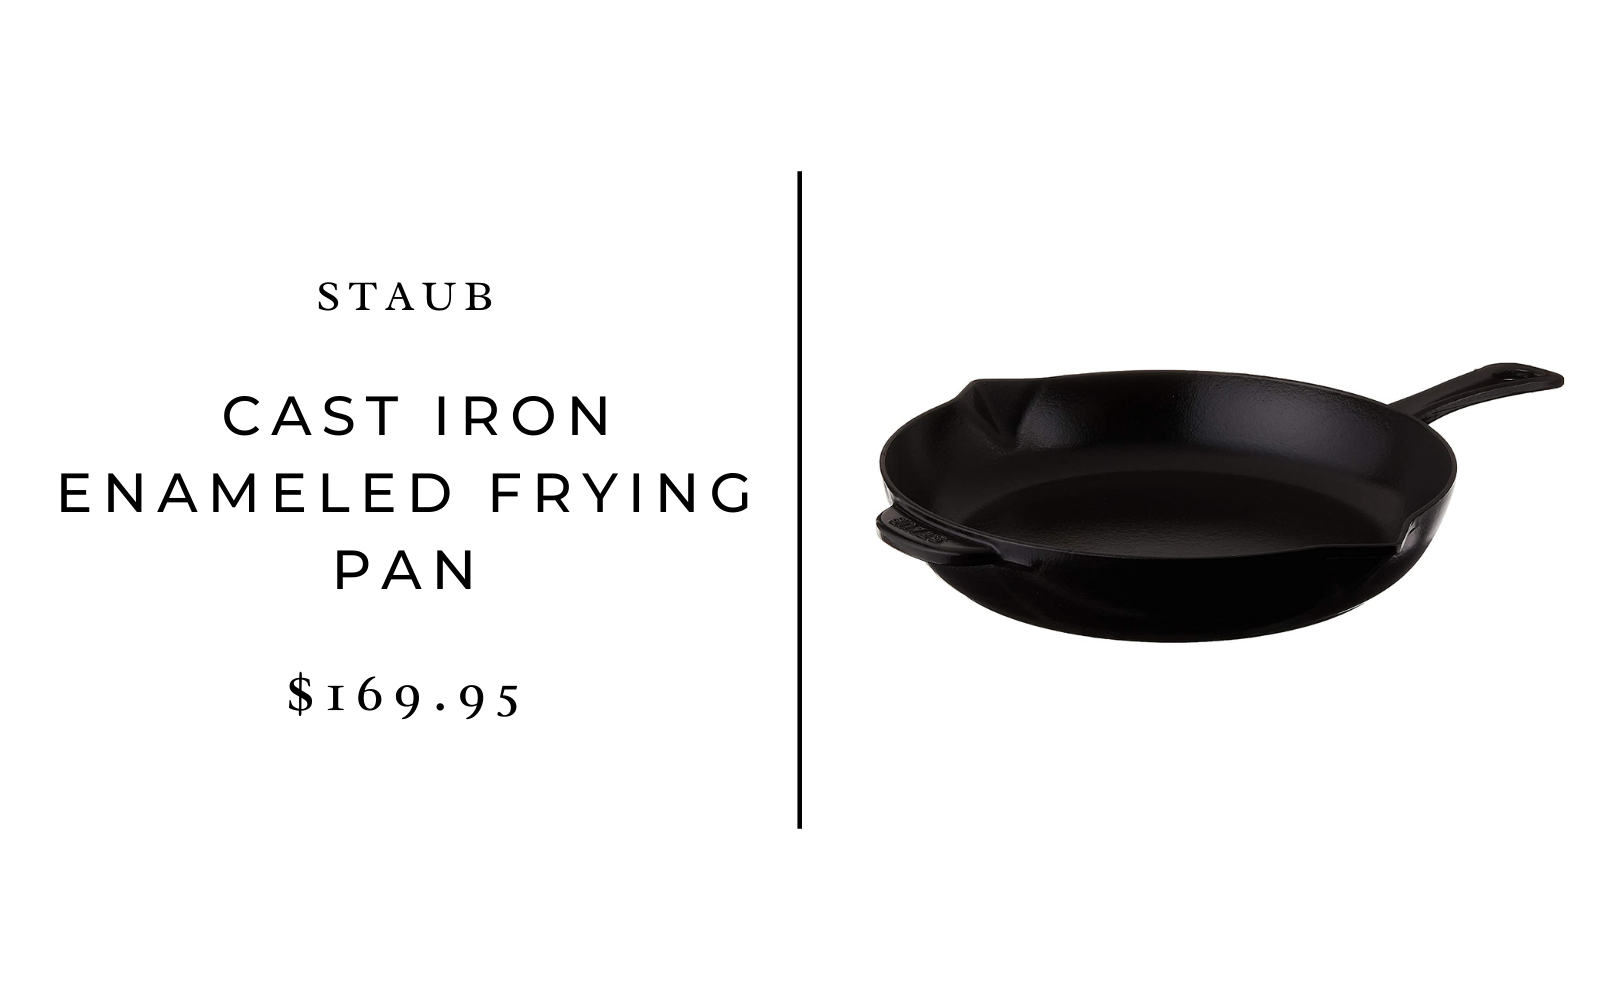 STAUB Cast Iron Enameled Frying Pan, 10-inch